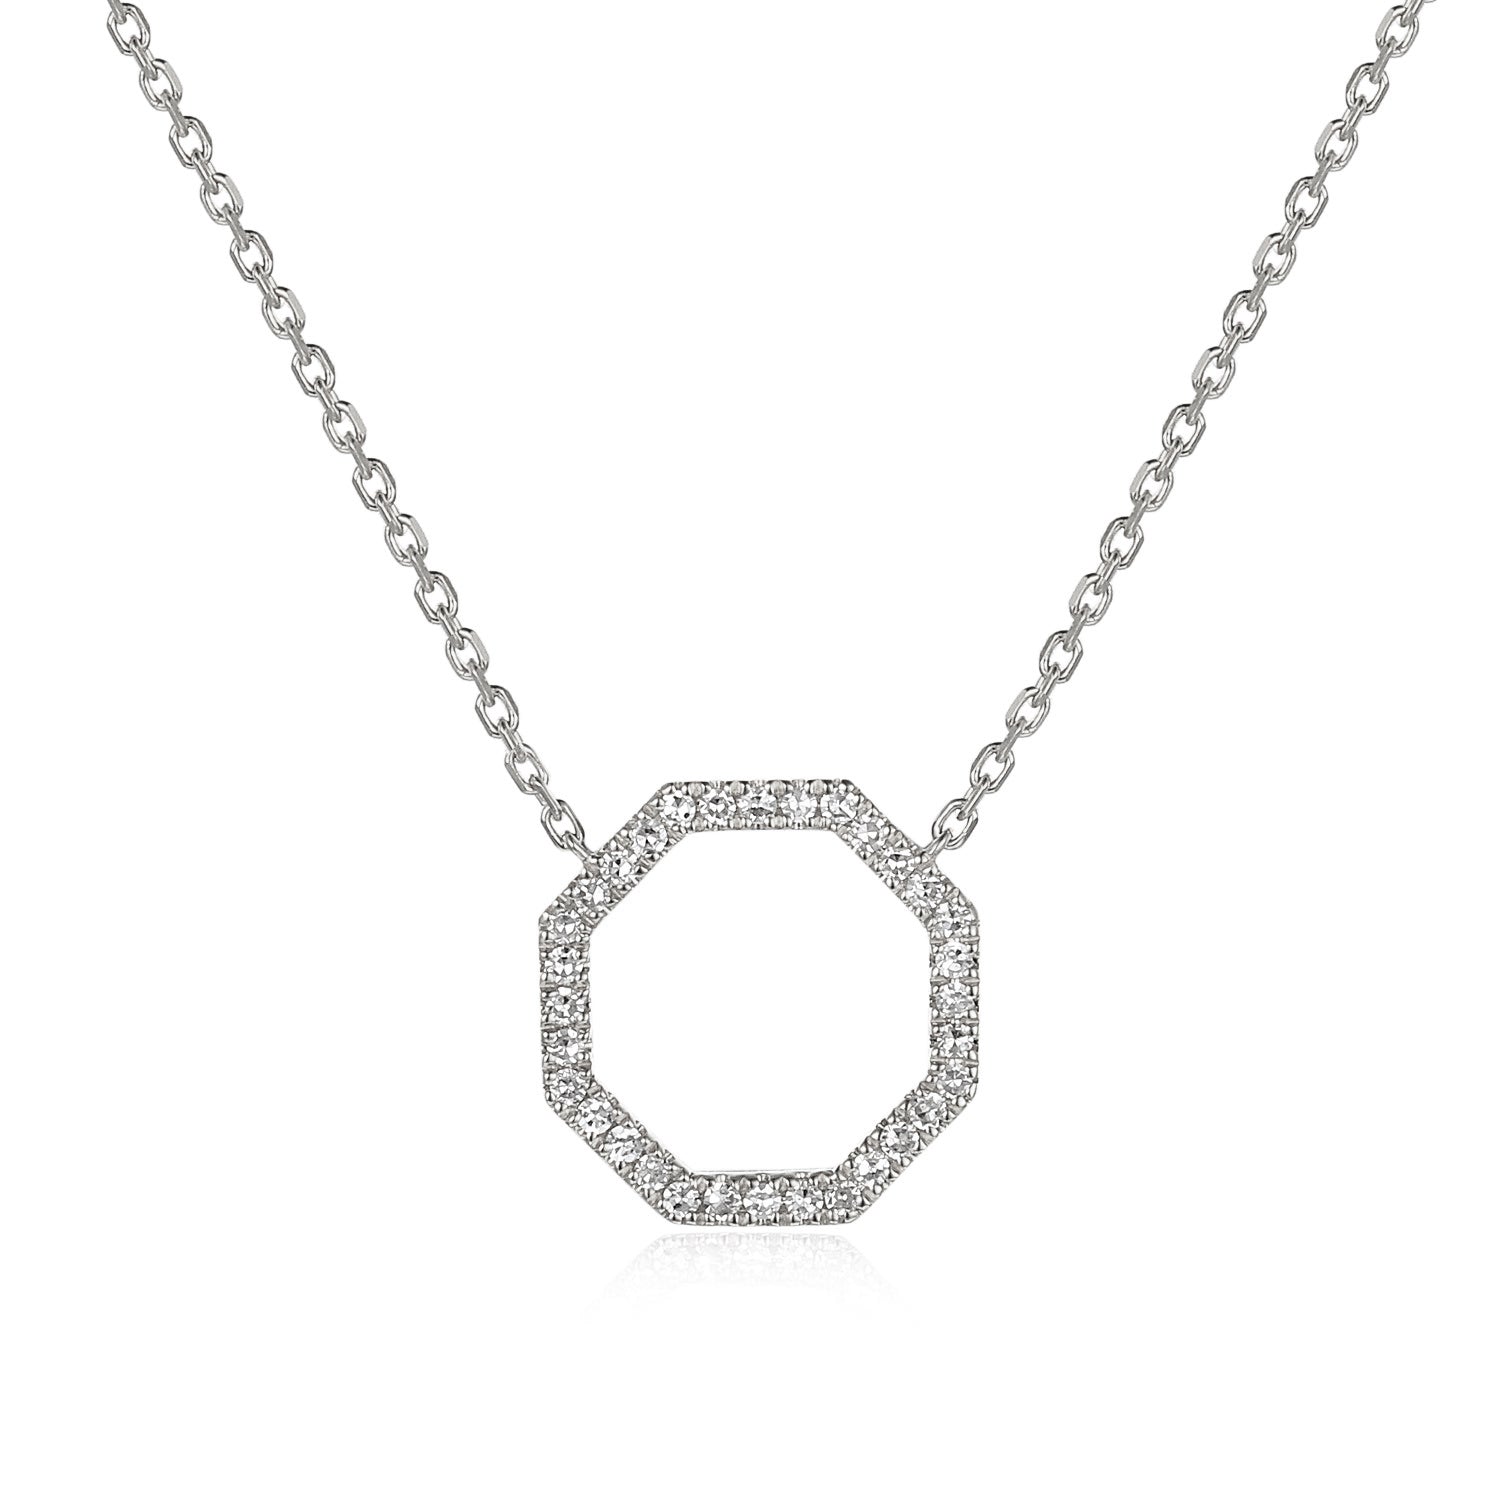 9ct White Gold Diamond Set Octagon Geometric Necklace